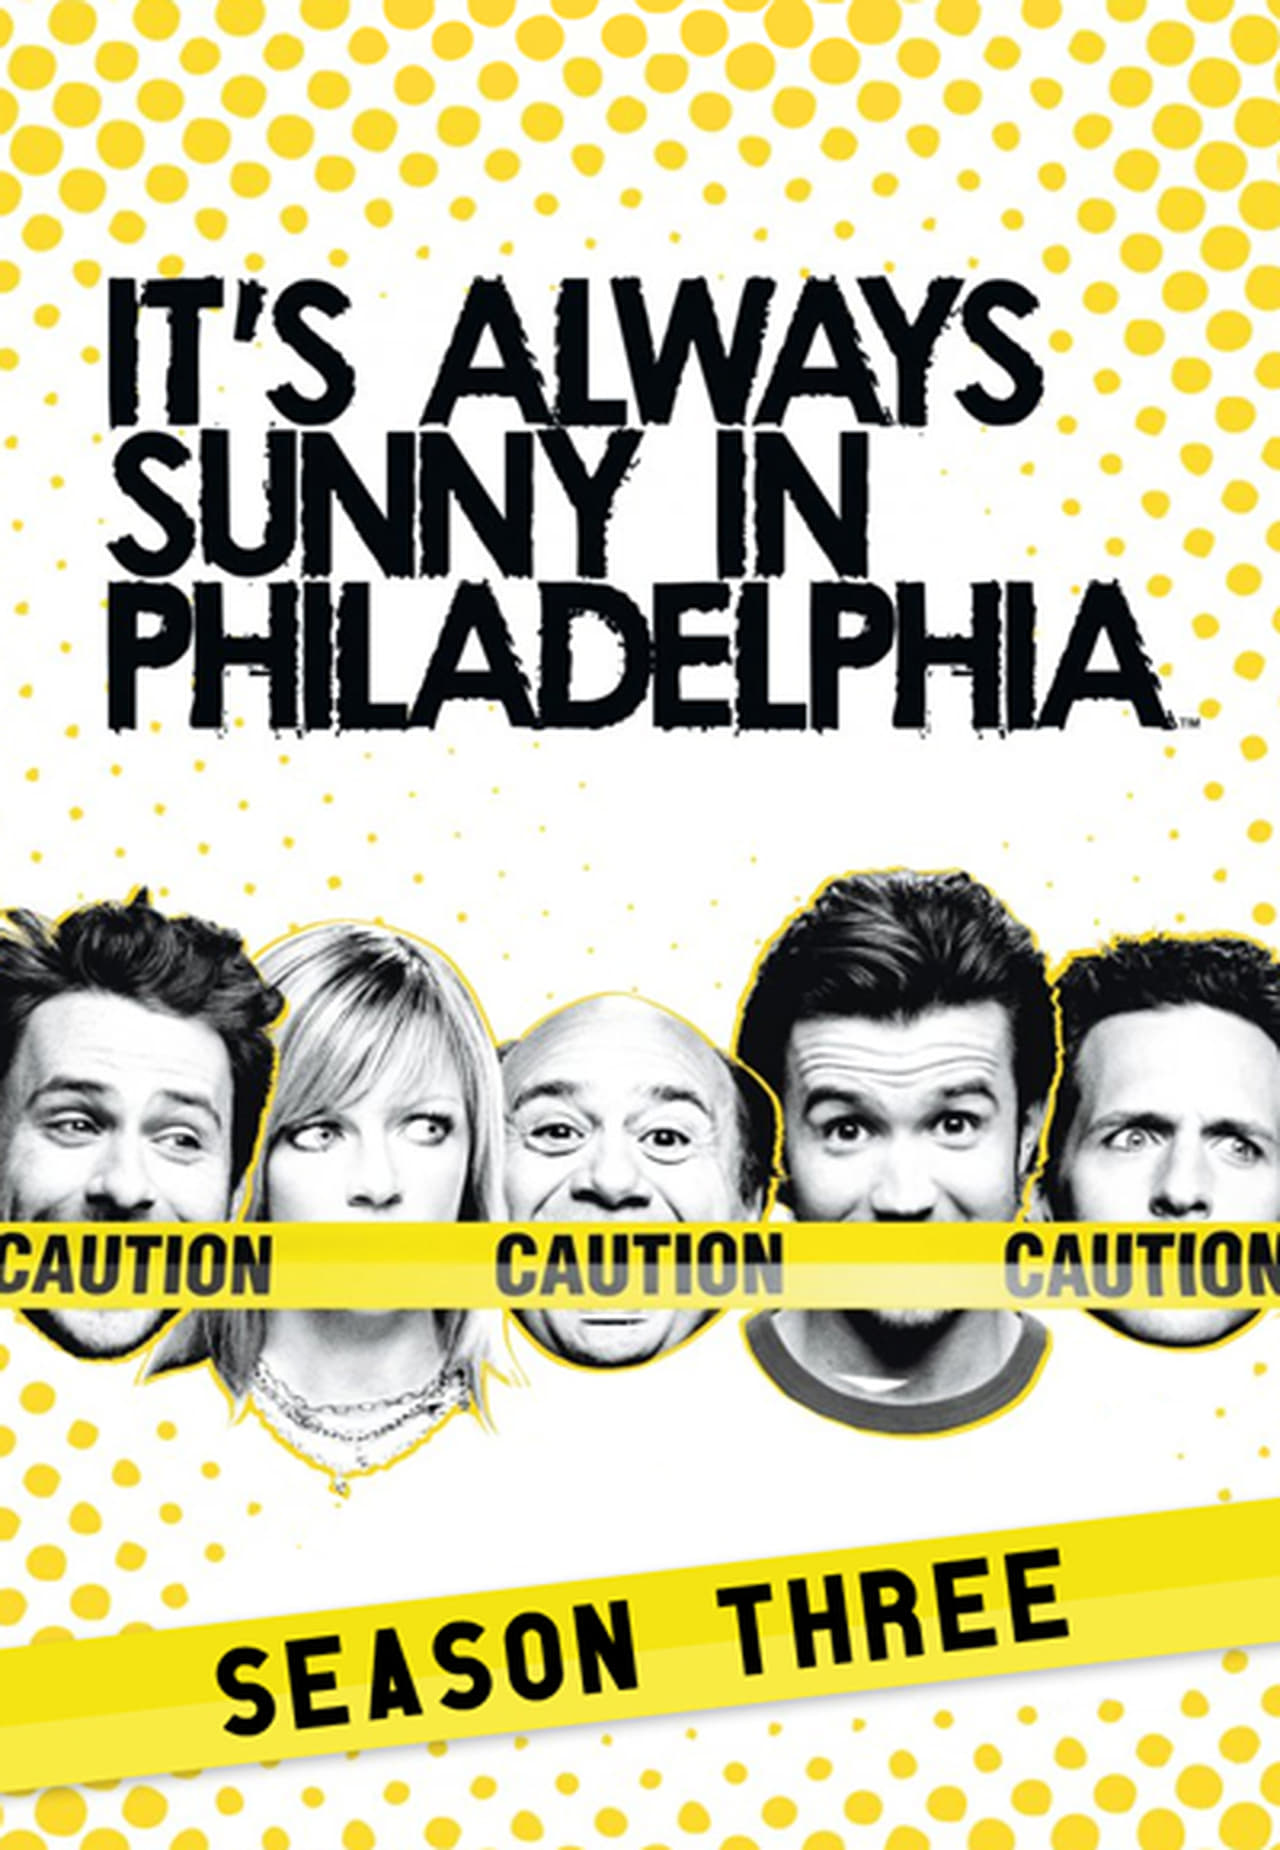 It's Always Sunny In Philadelphia Season 3